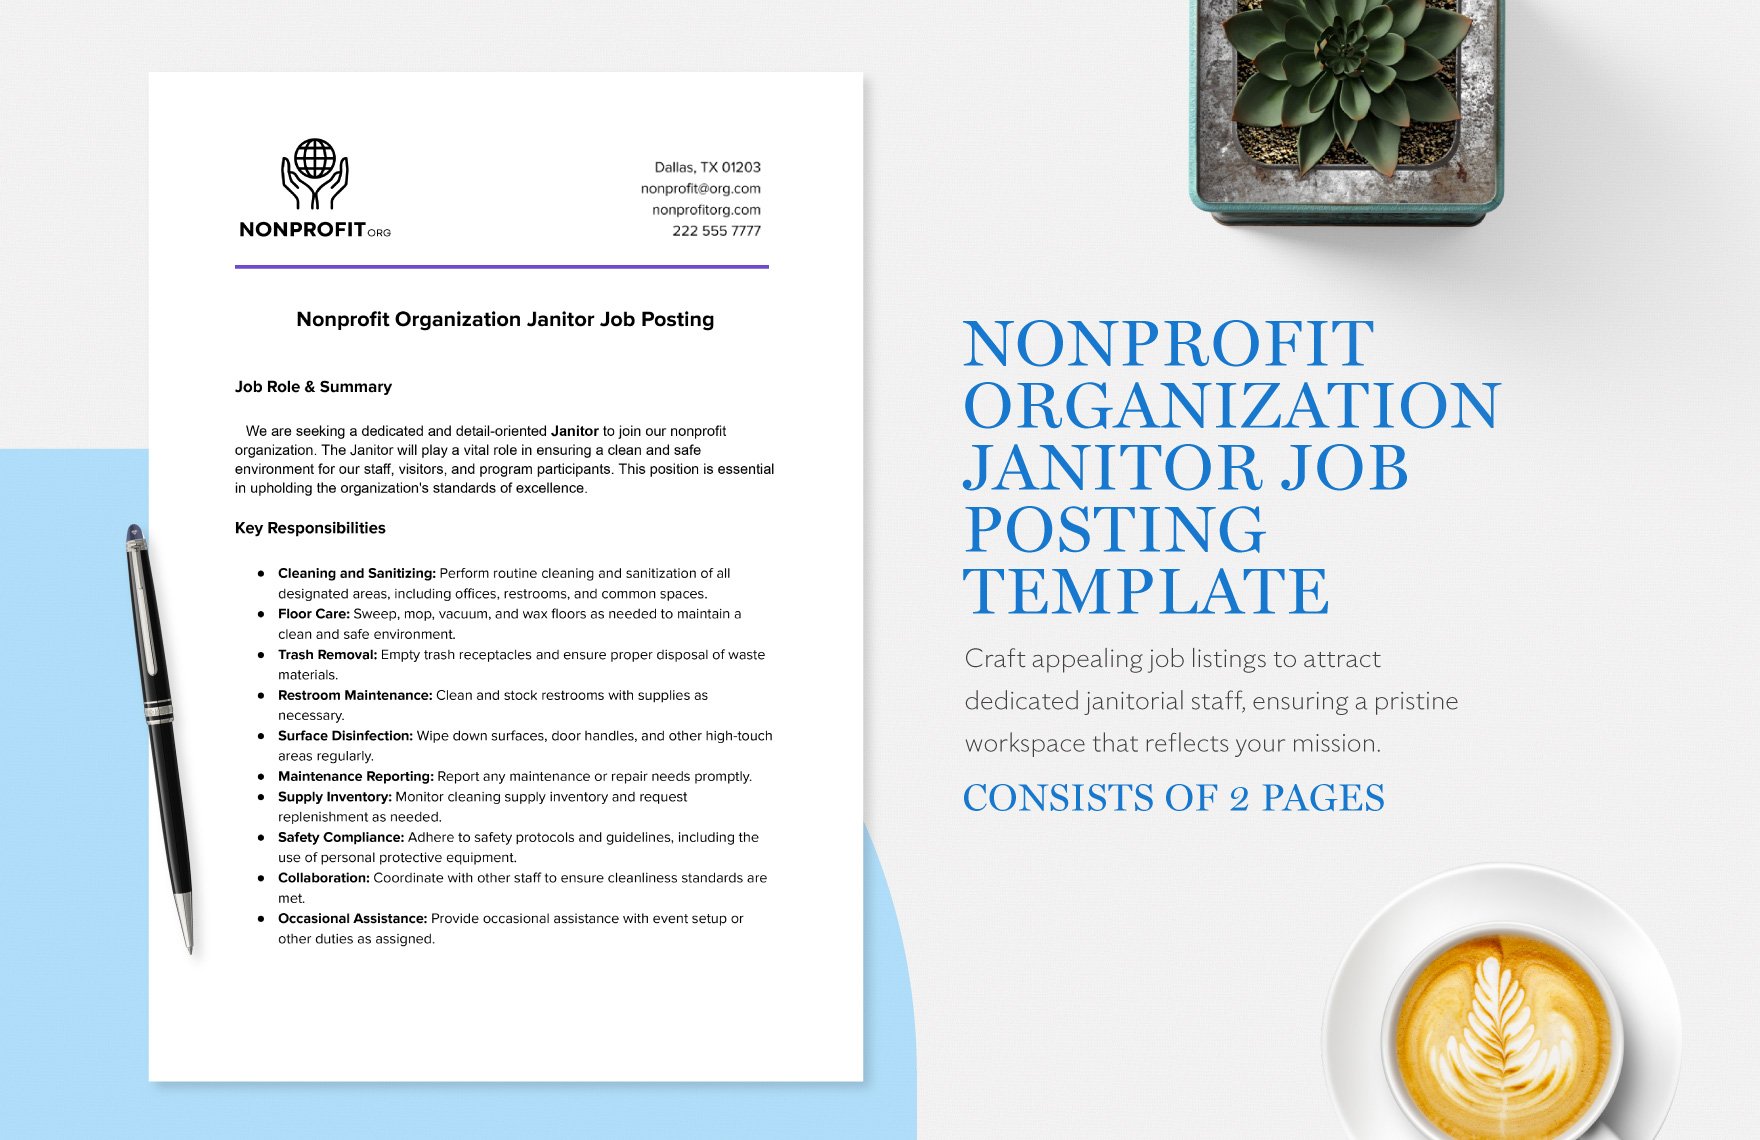 Nonprofit Organization Janitor Job Posting Template